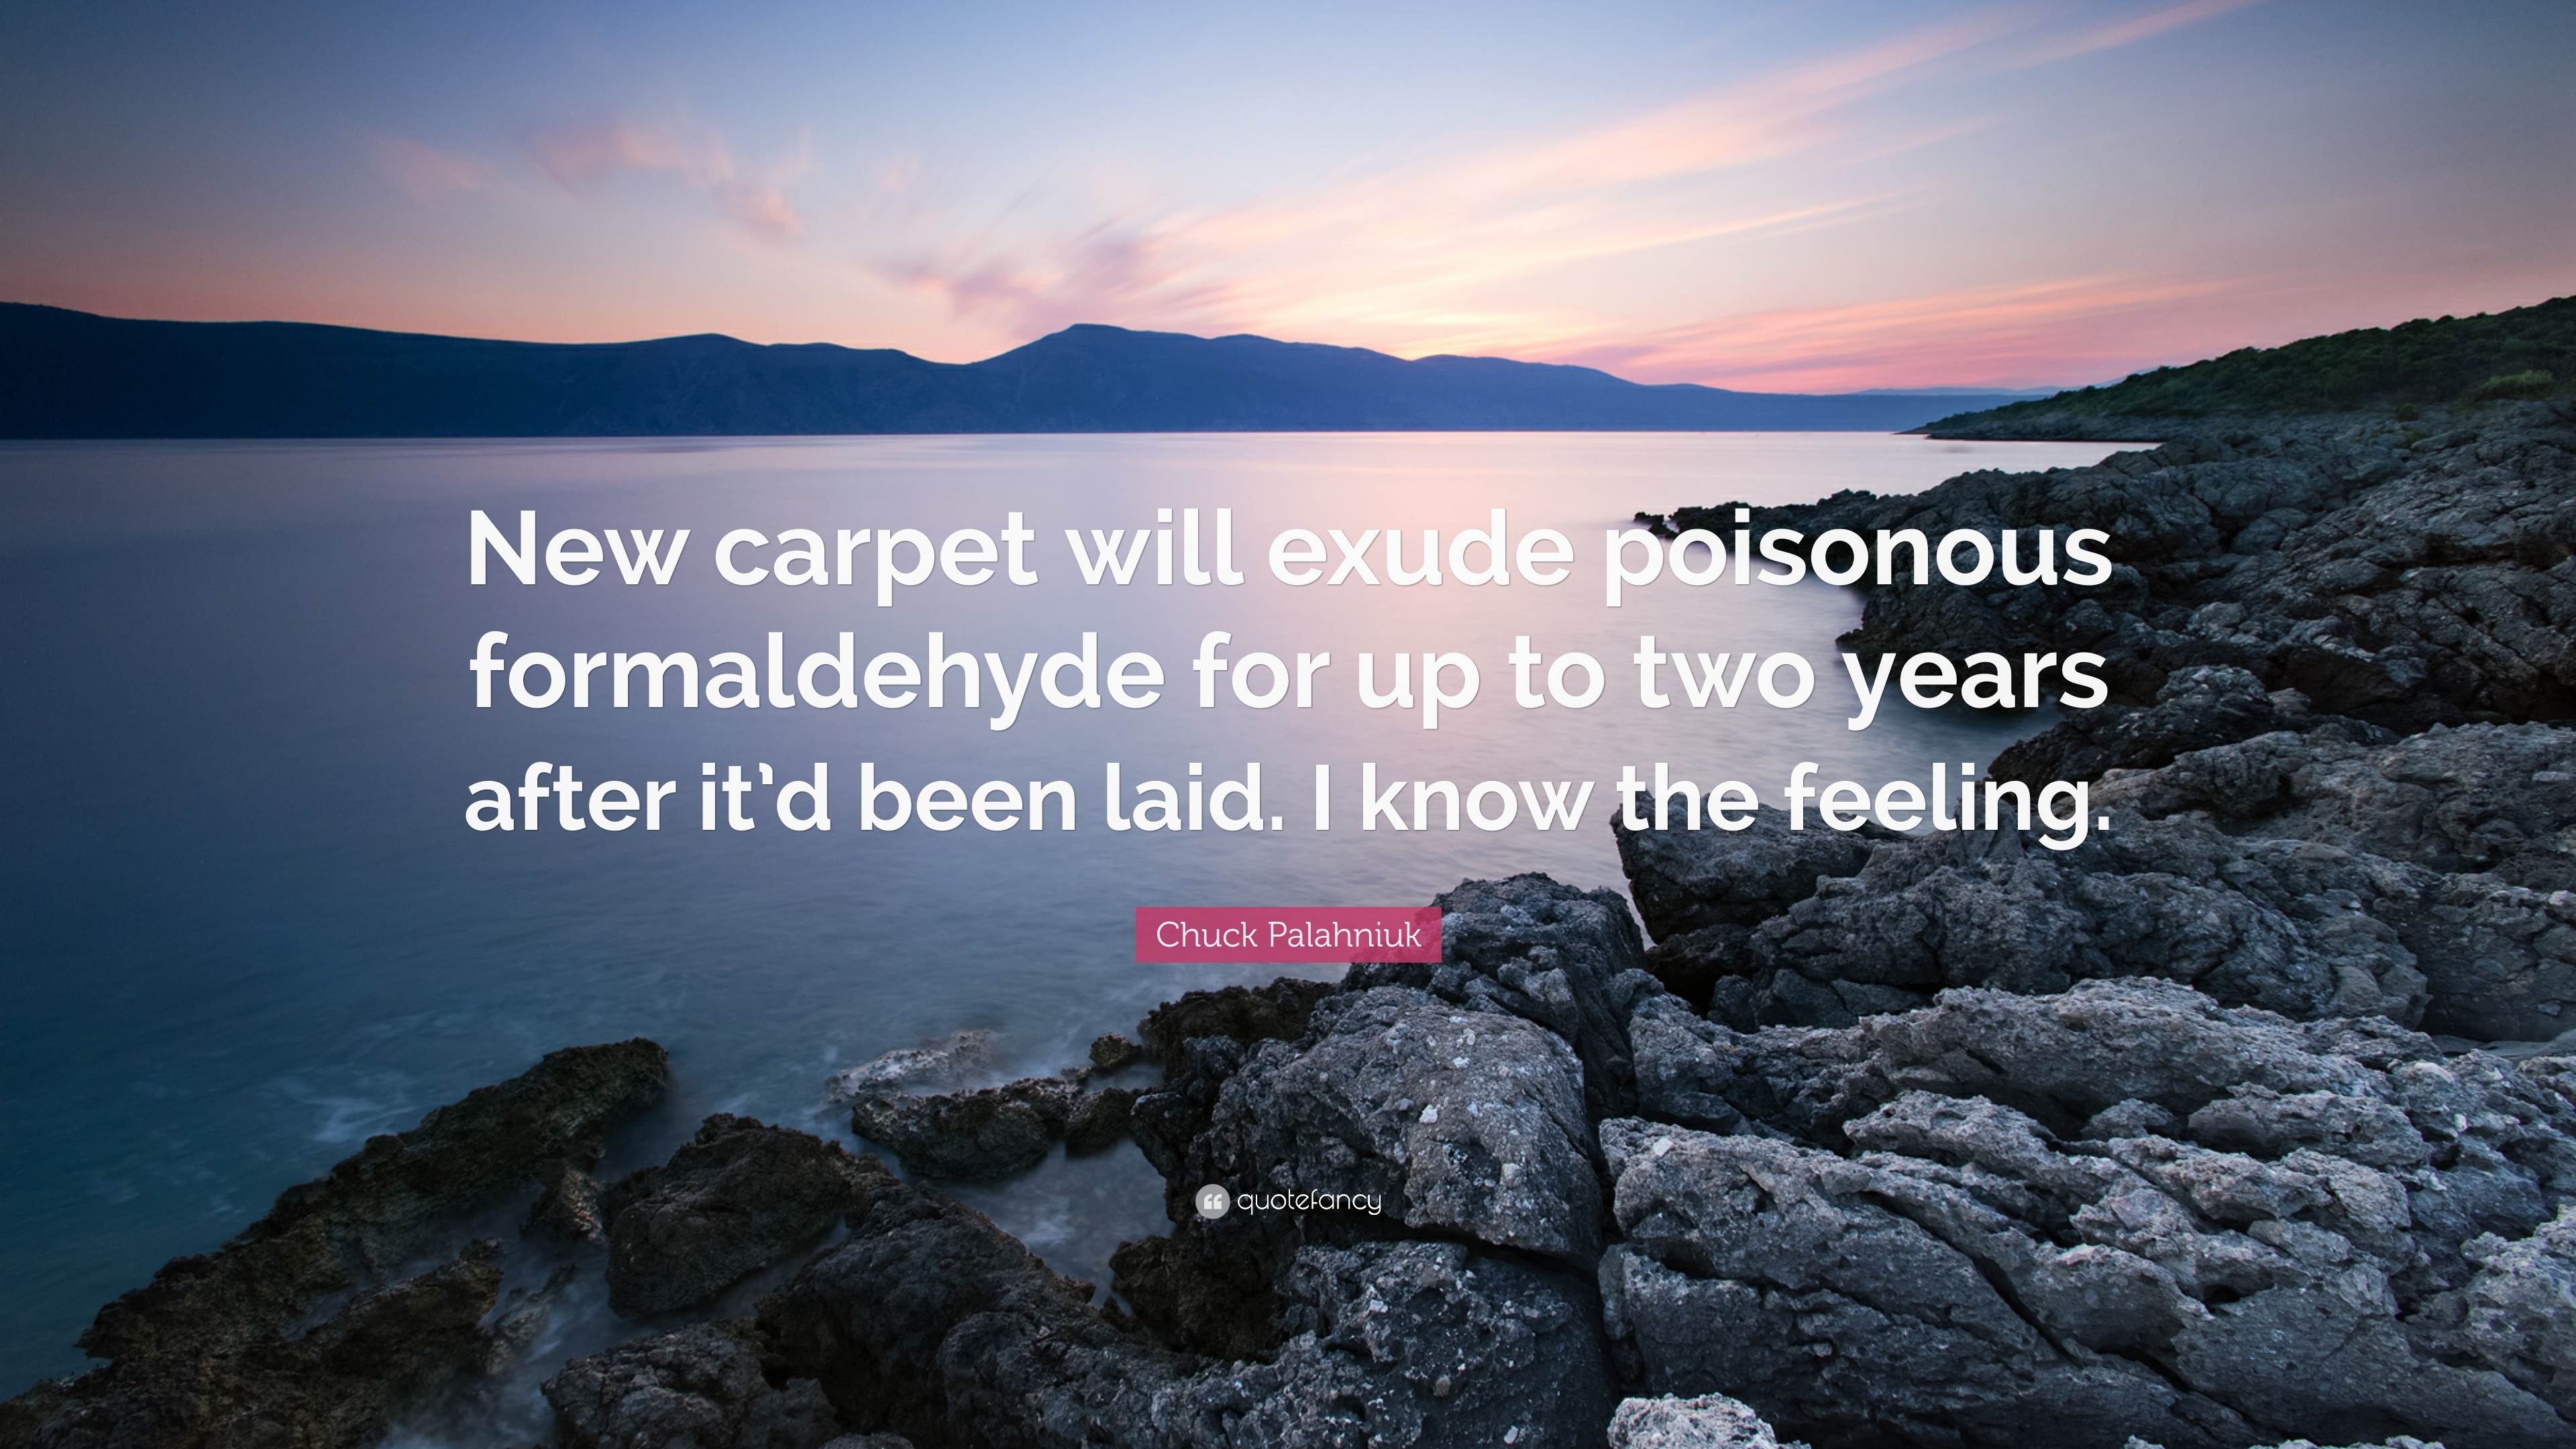 Chuck Palahniuk Quote: “New carpet will 